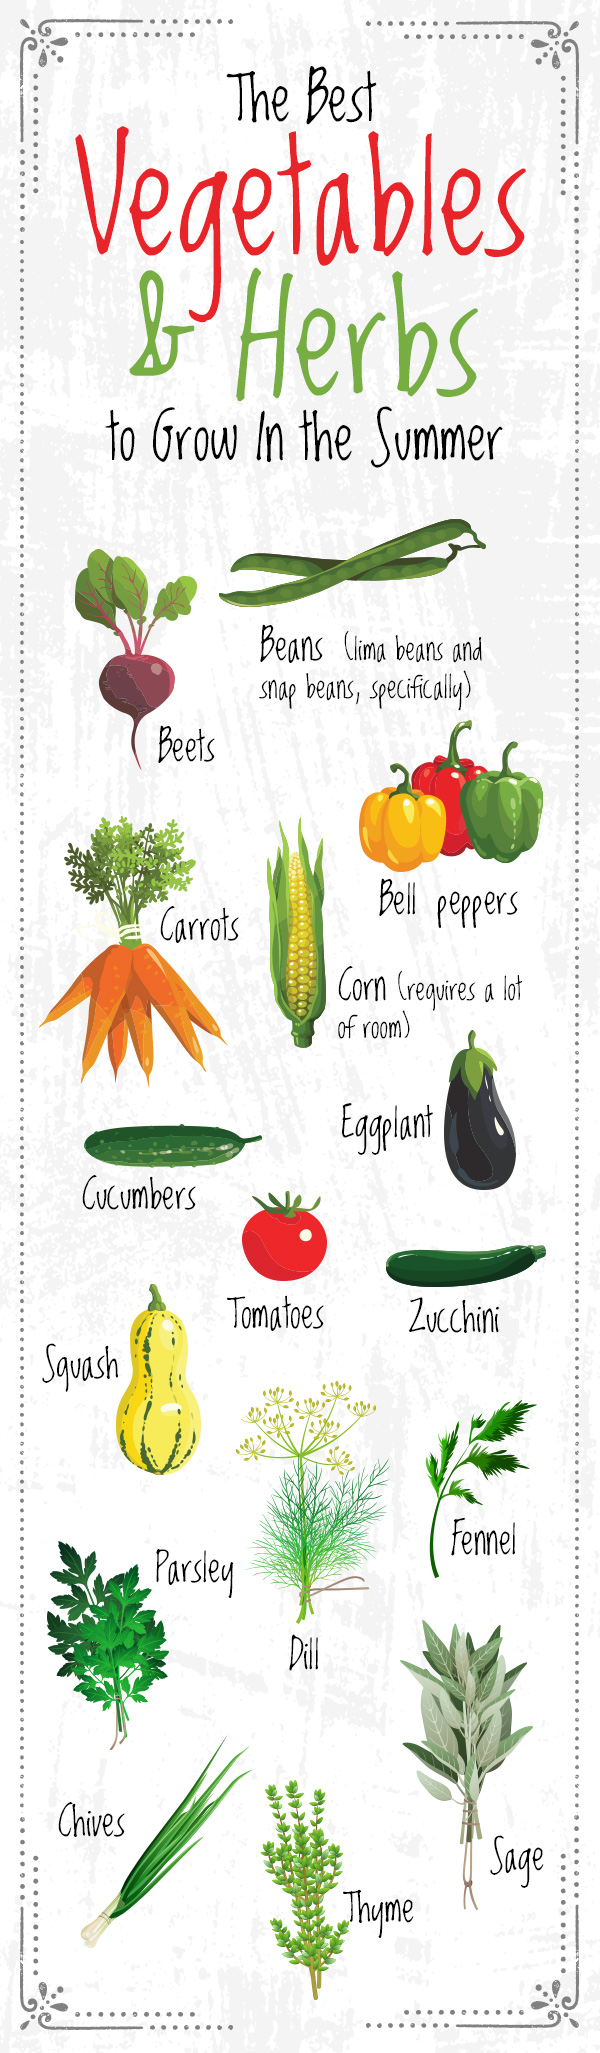 Summer Vegetables - Which Veggies Grow the Best in Summer?